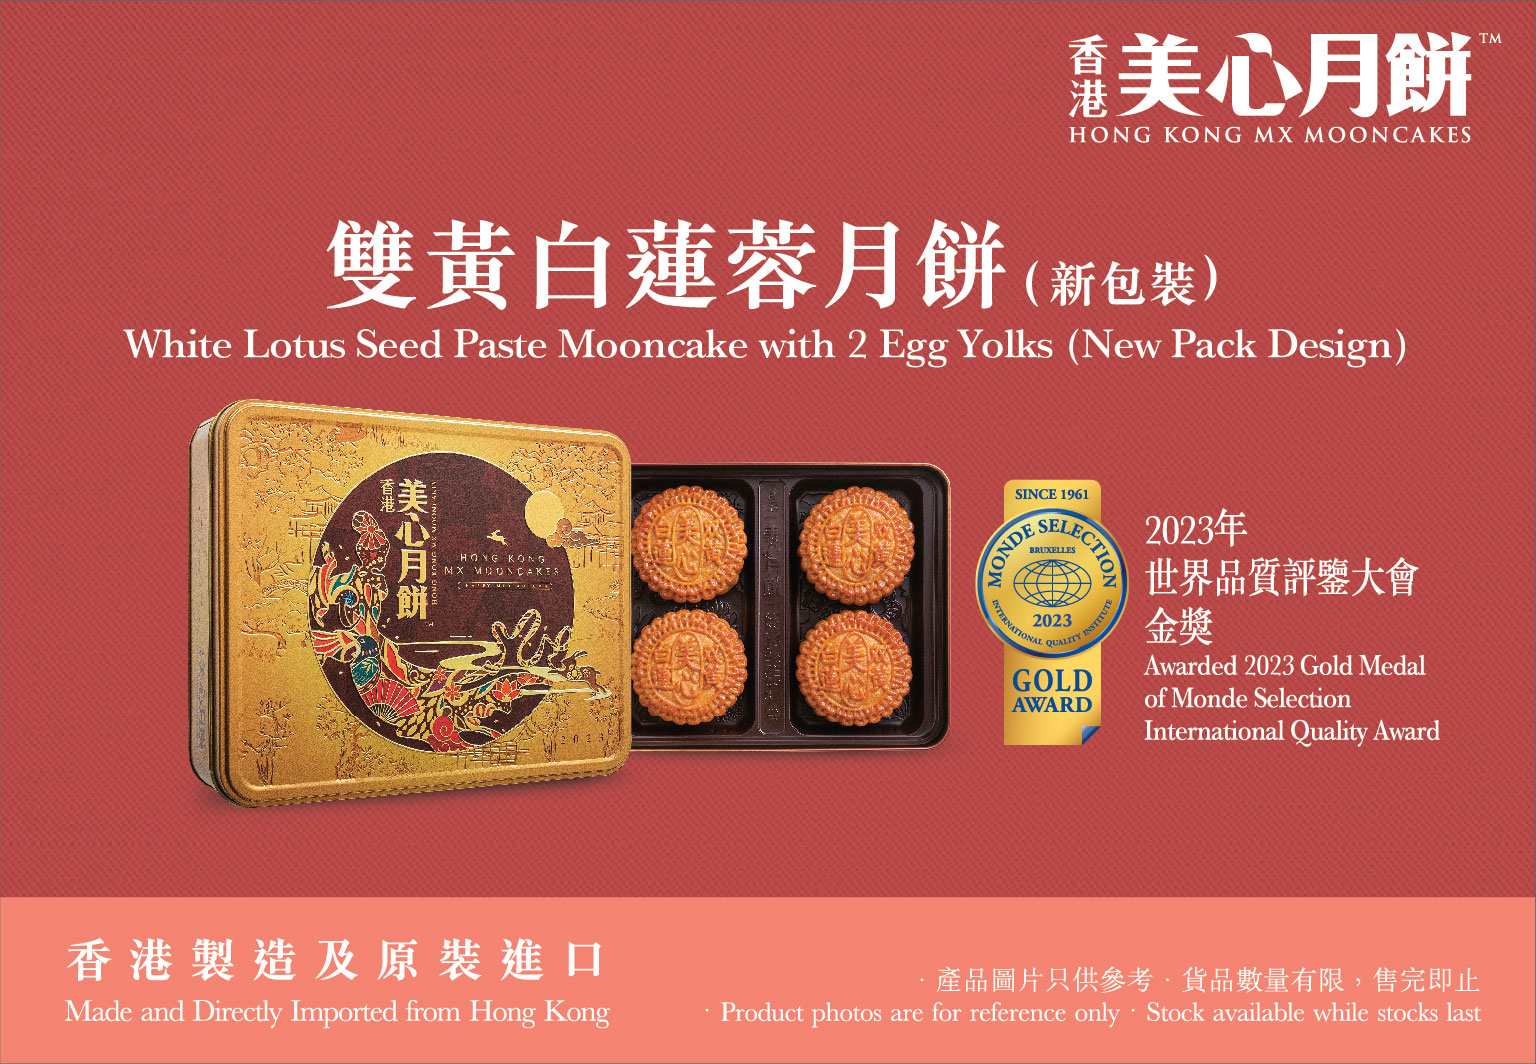 HKMX-White-Lotus-Seed-Paste-Mooncake-with-2-Egg-Yolks-Monde-Selection-Award